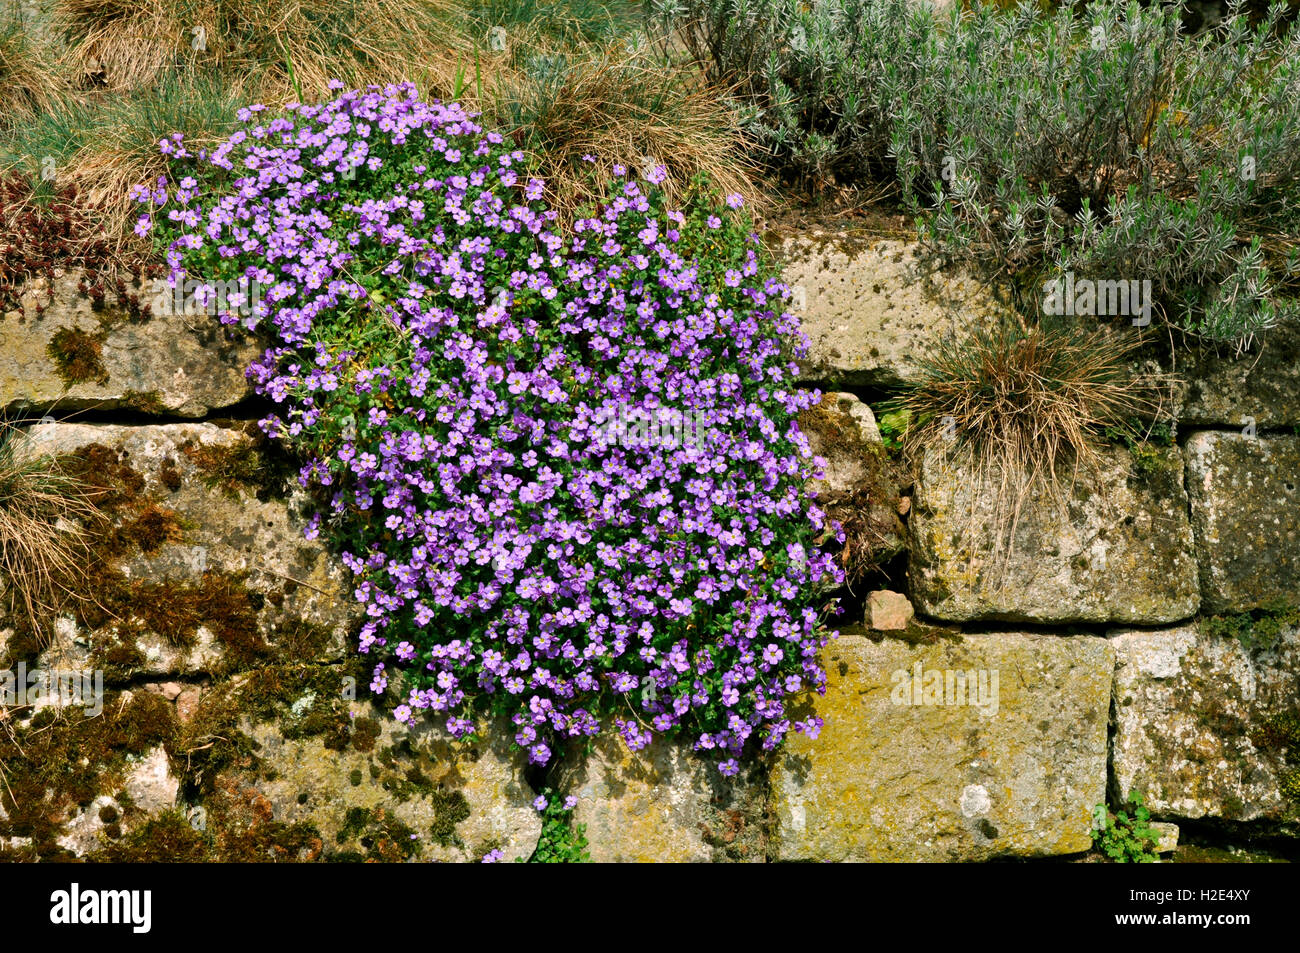 Aubrieta (Aubrieta x cultorum), flowering plant in a stone wall. Germany Stock Photo